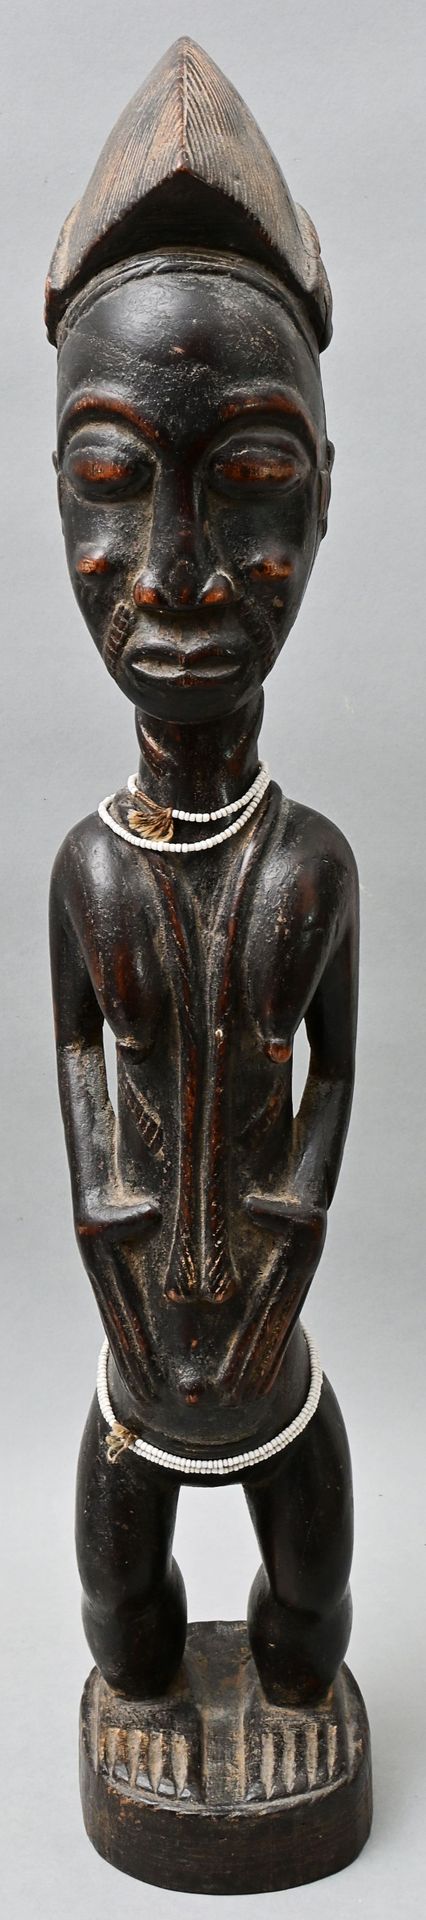 Null Statuette, Ivory Coast, Baule Female figure in standing posture. Wood, carv&hellip;